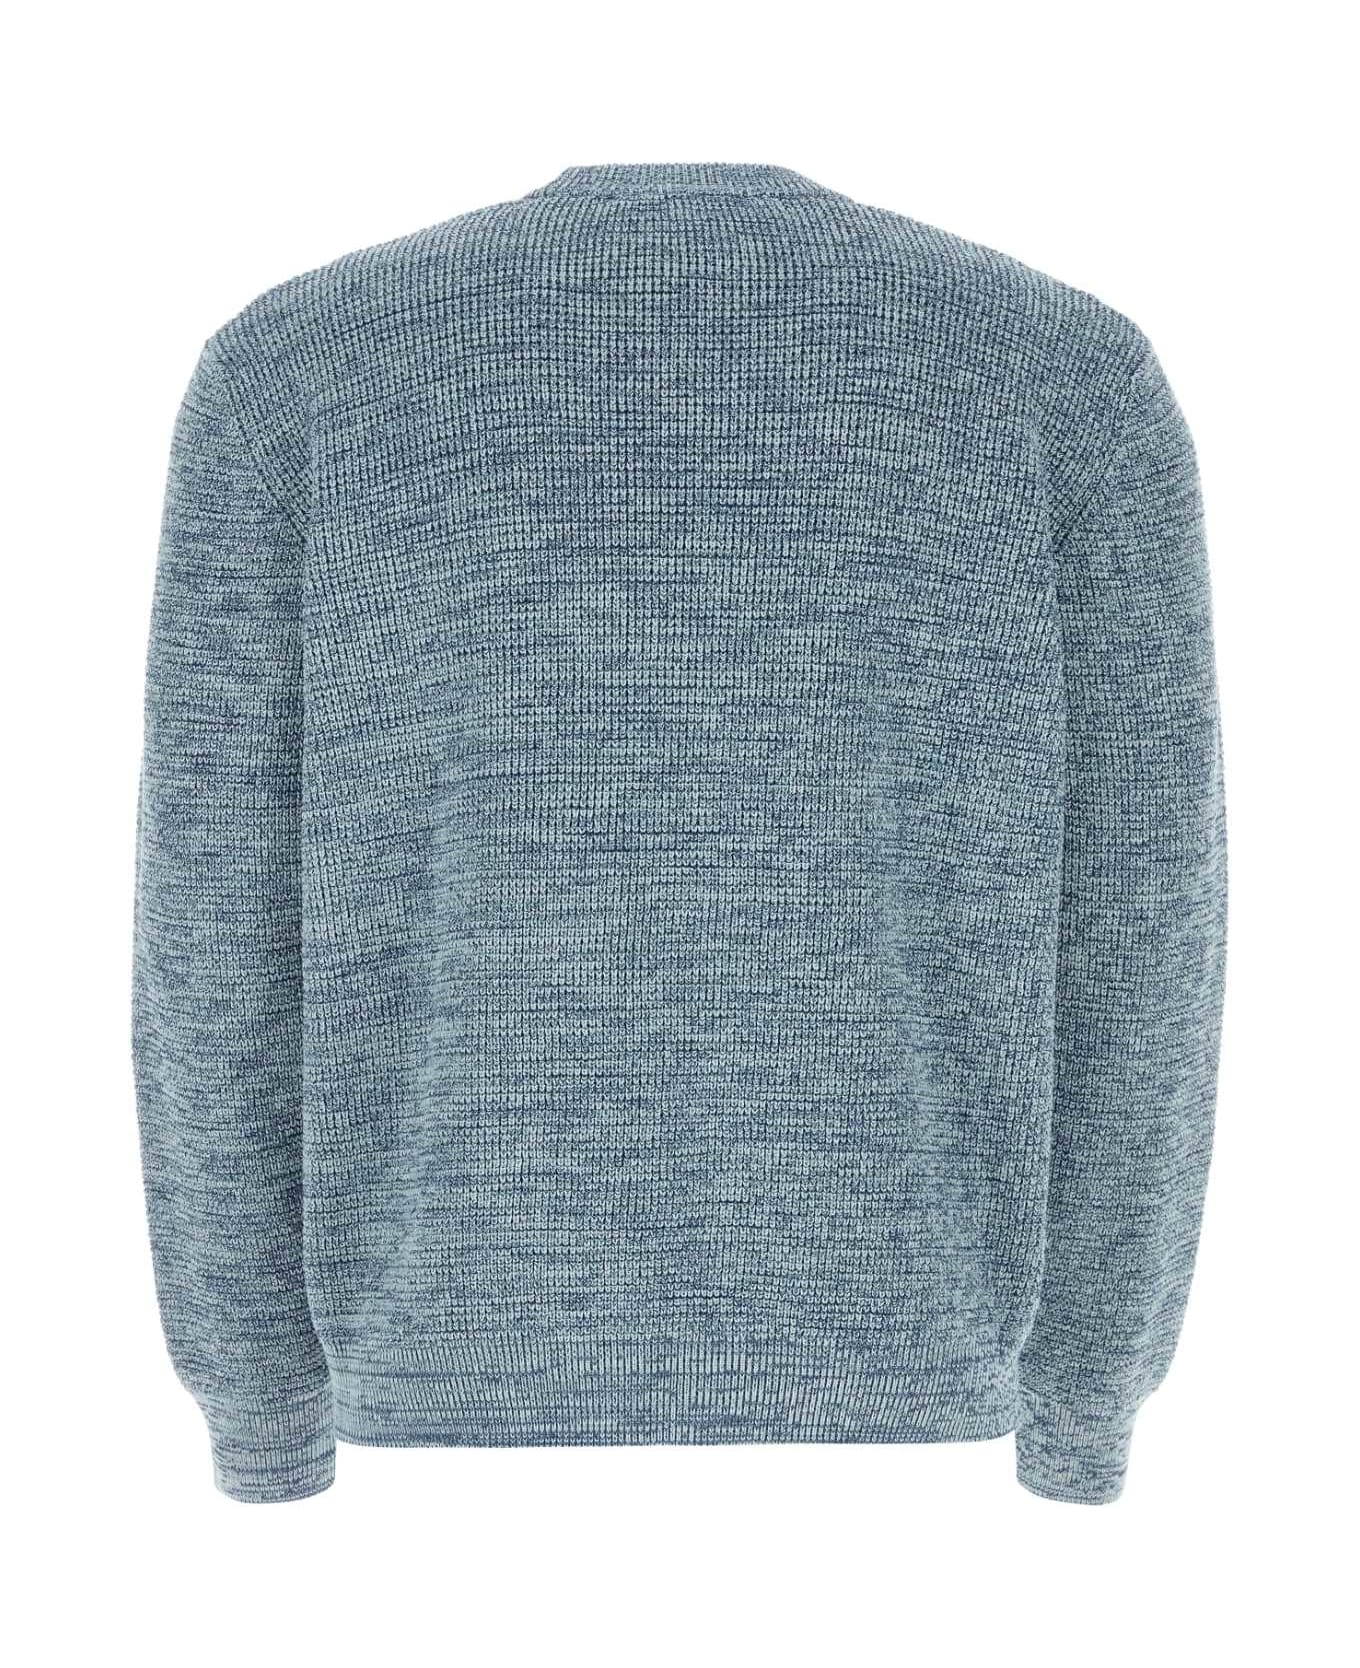 Maison Kitsuné Melange Light Blue Cotton Sweater - INKBLUEMELANGE